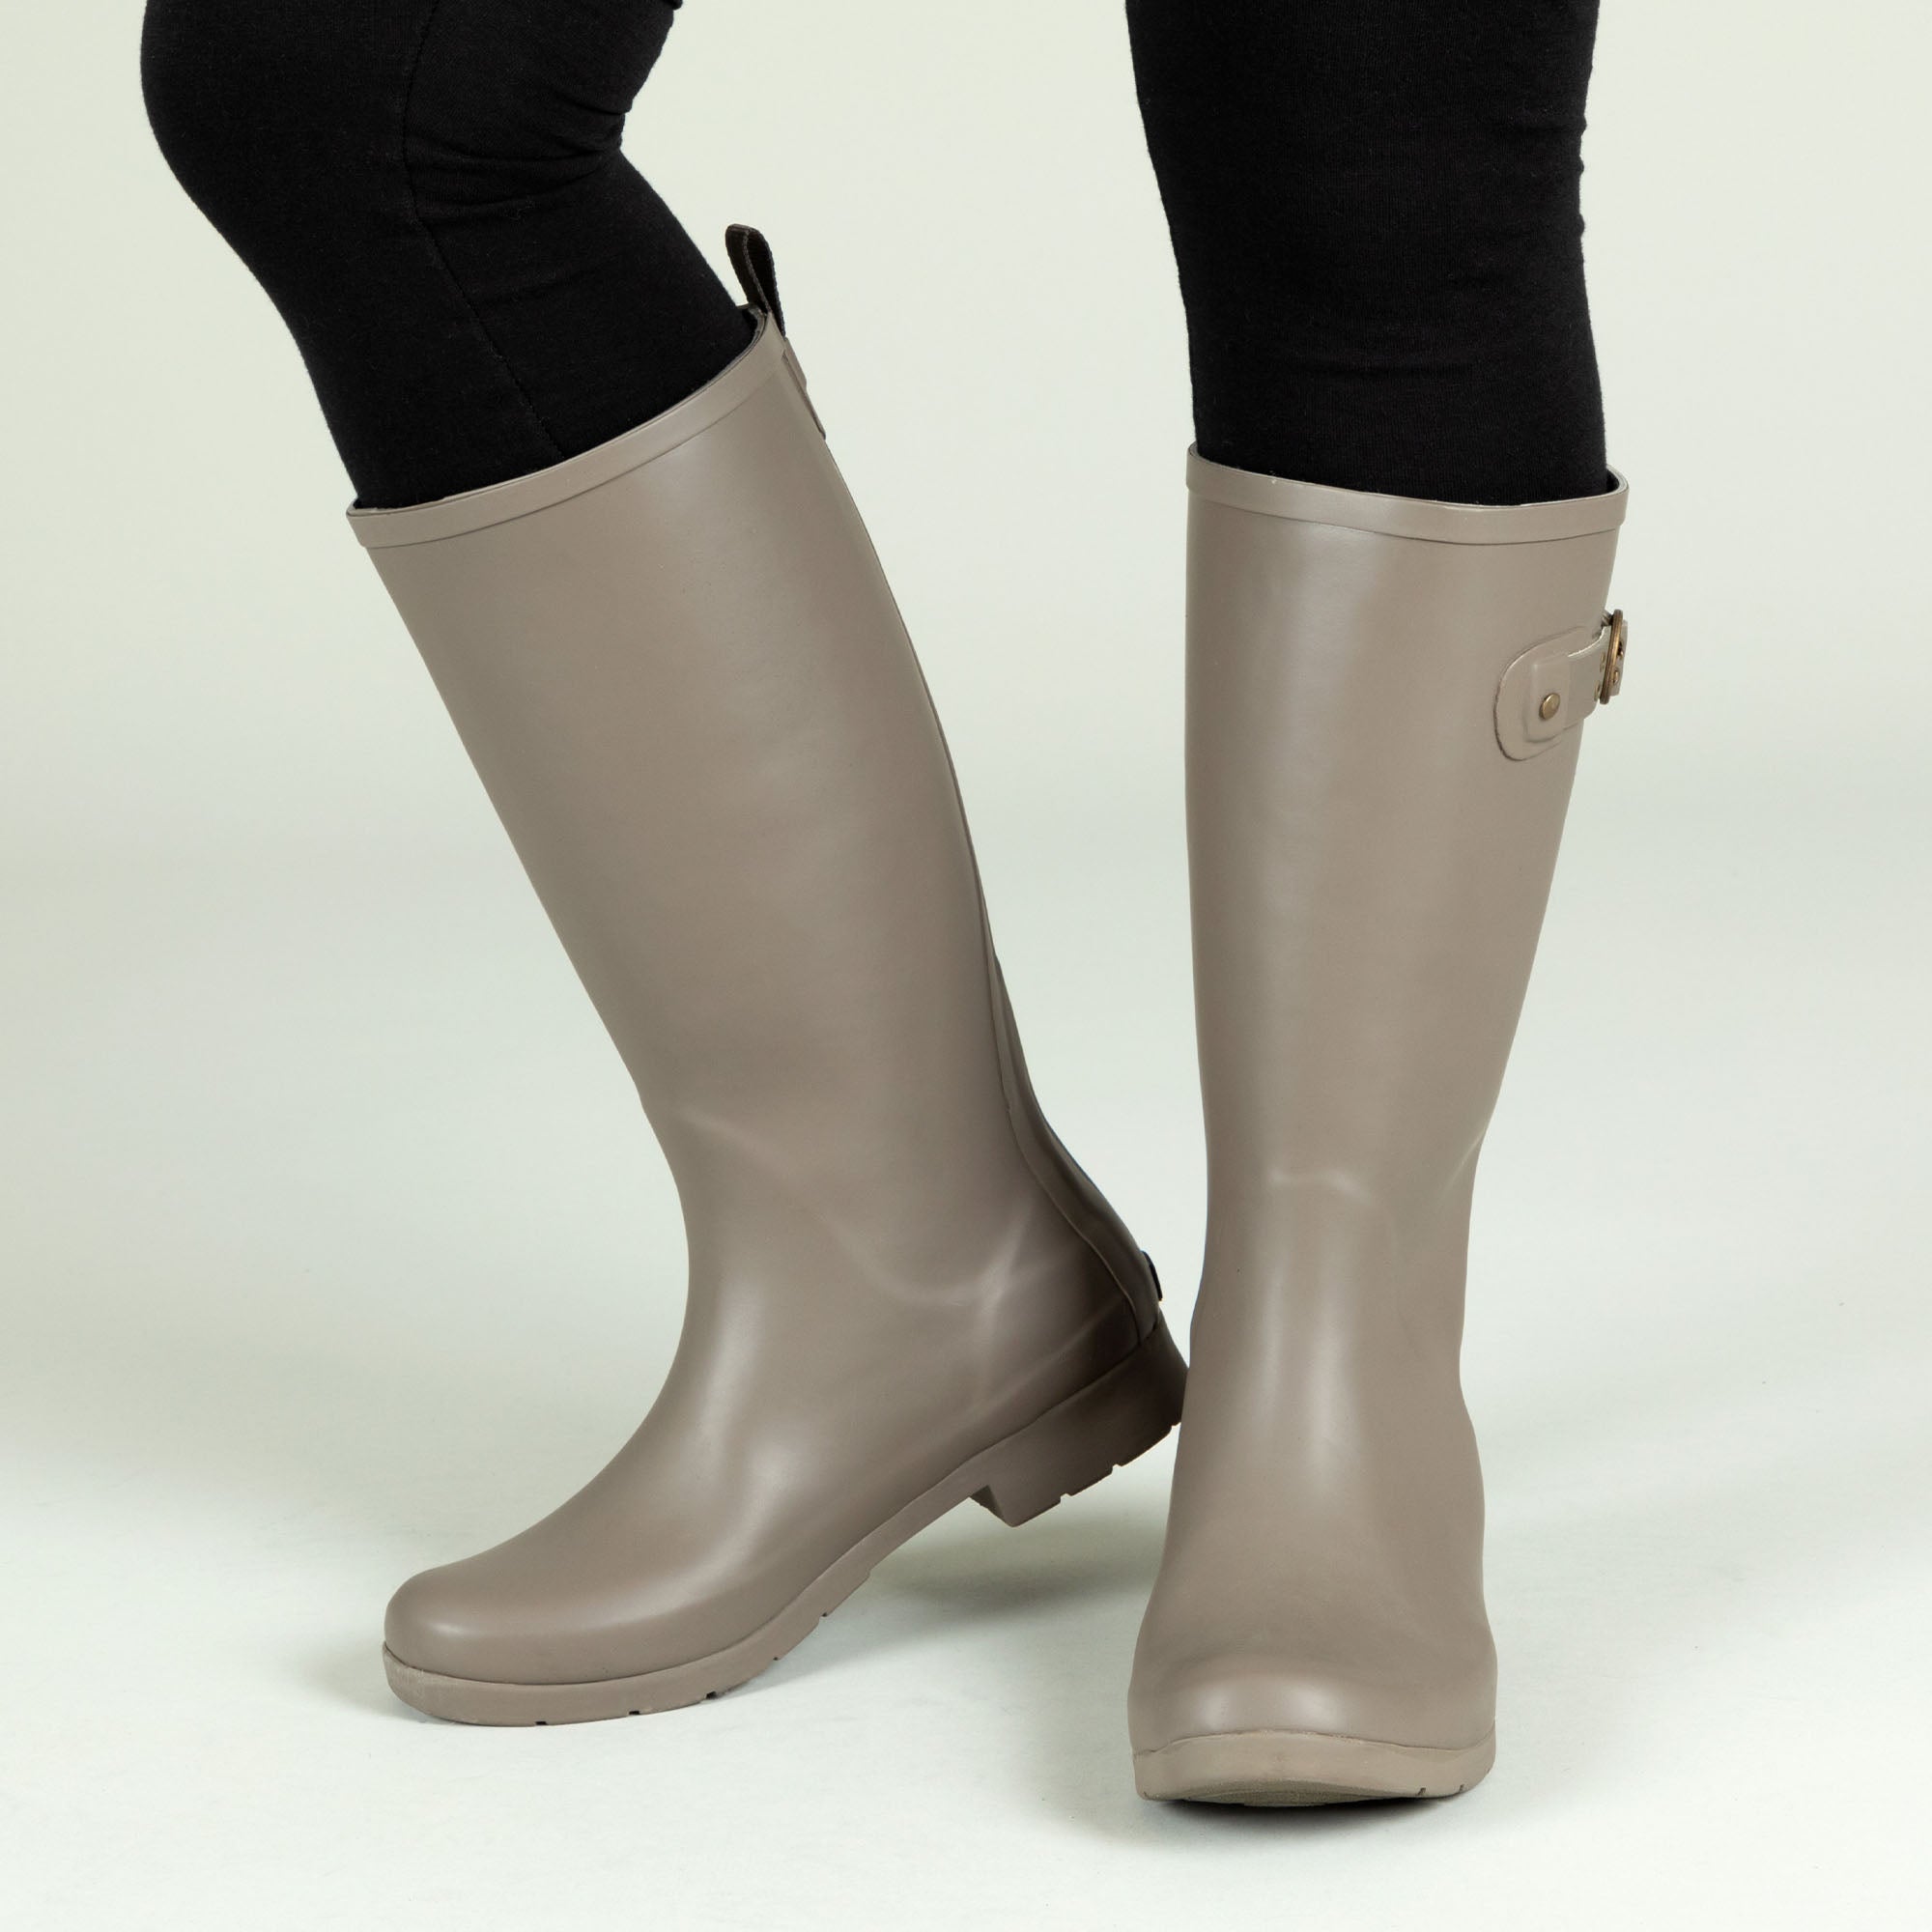 Eastlake Classic Tall Rain Boots - Taupe - 6